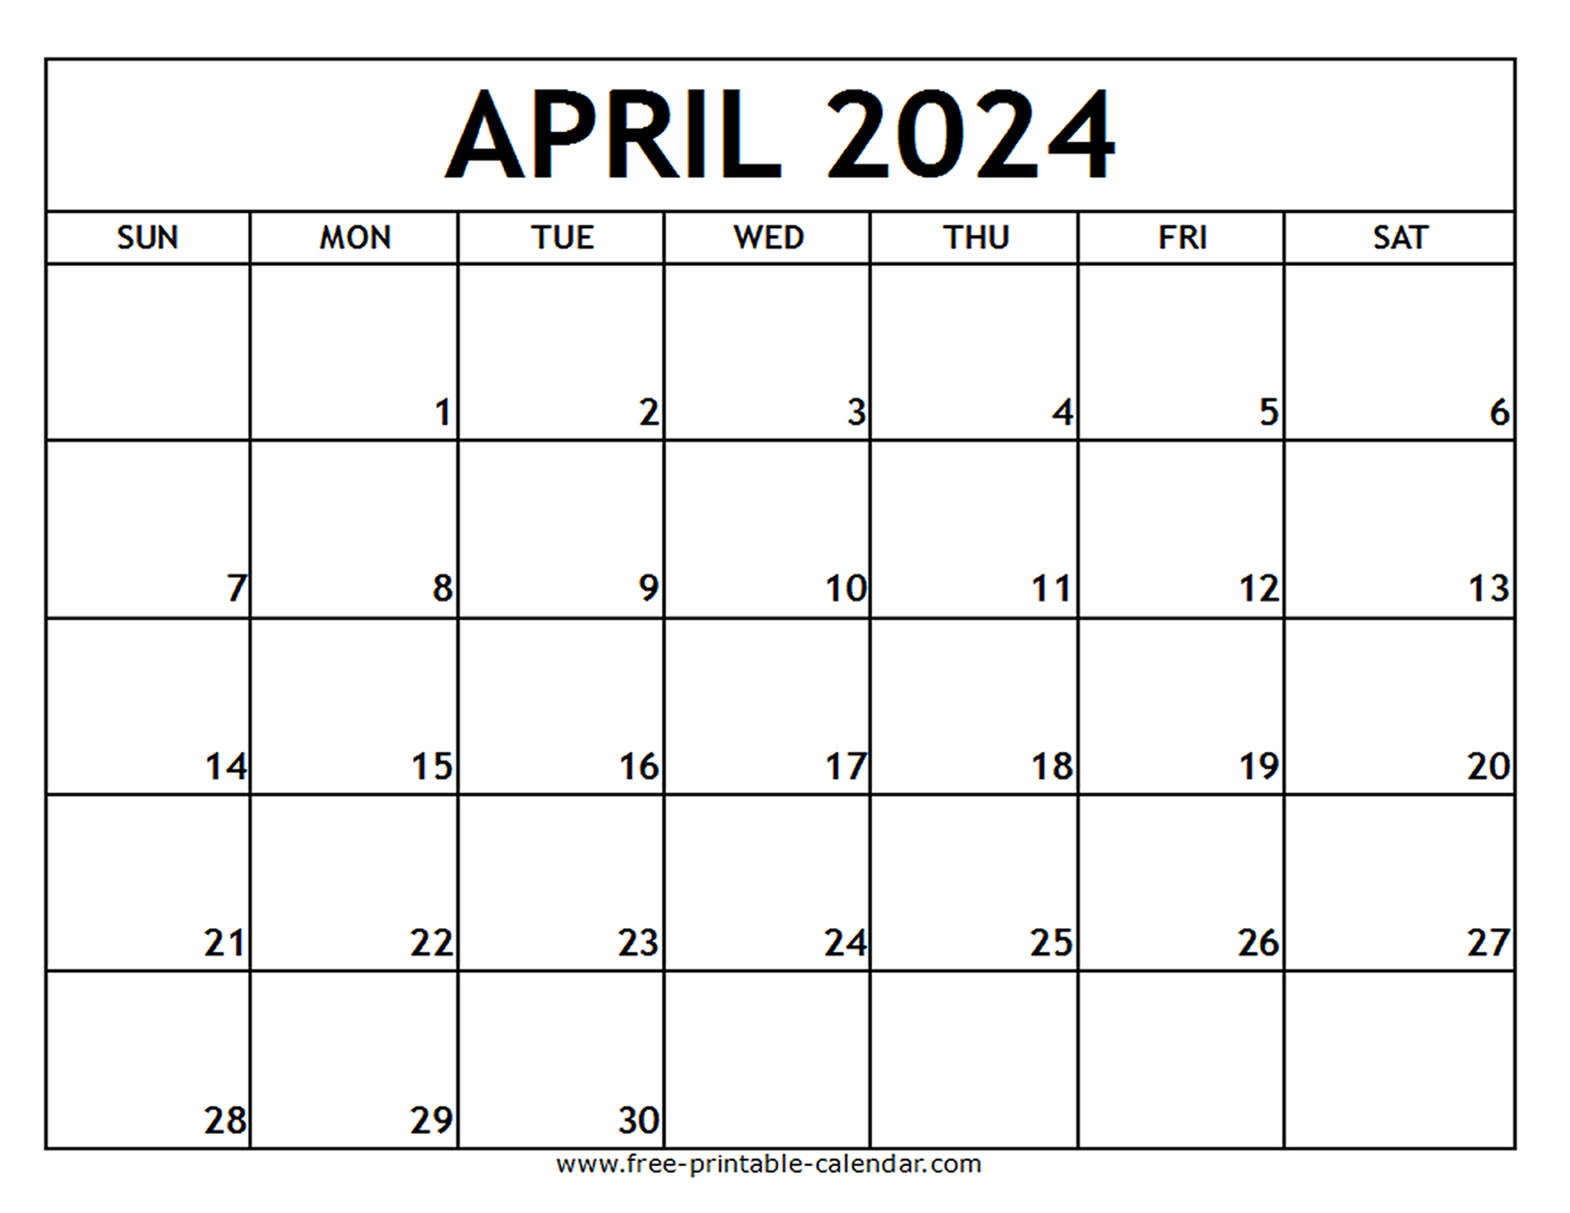 April 2024 Printable Calendar - Free-Printable-Calendar throughout April Blank Calendar 2024